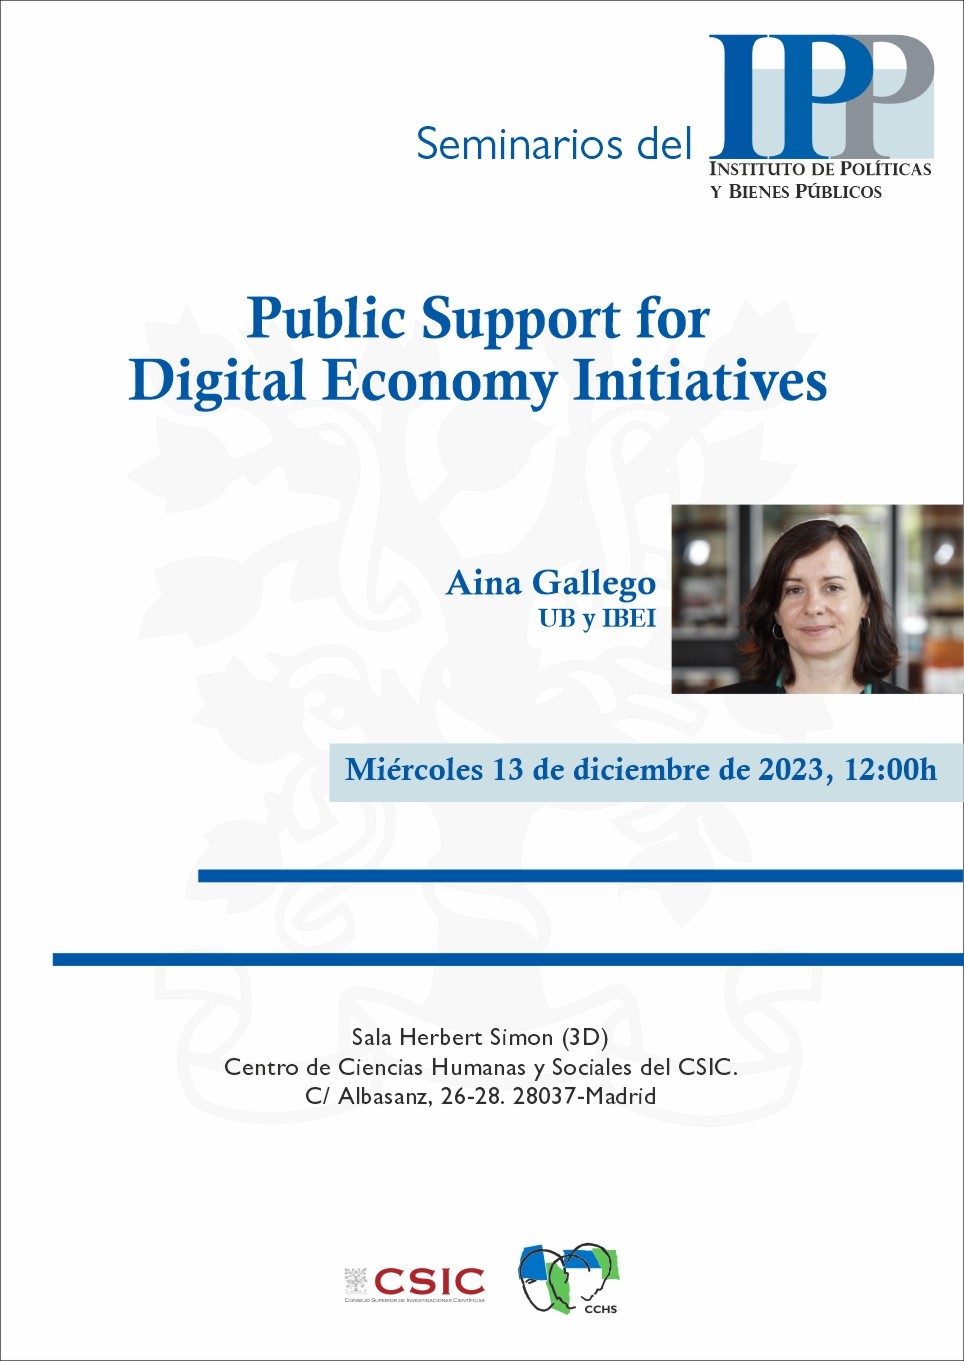 Seminarios del IPP: "Public Support for Digital Economy Initiatives"